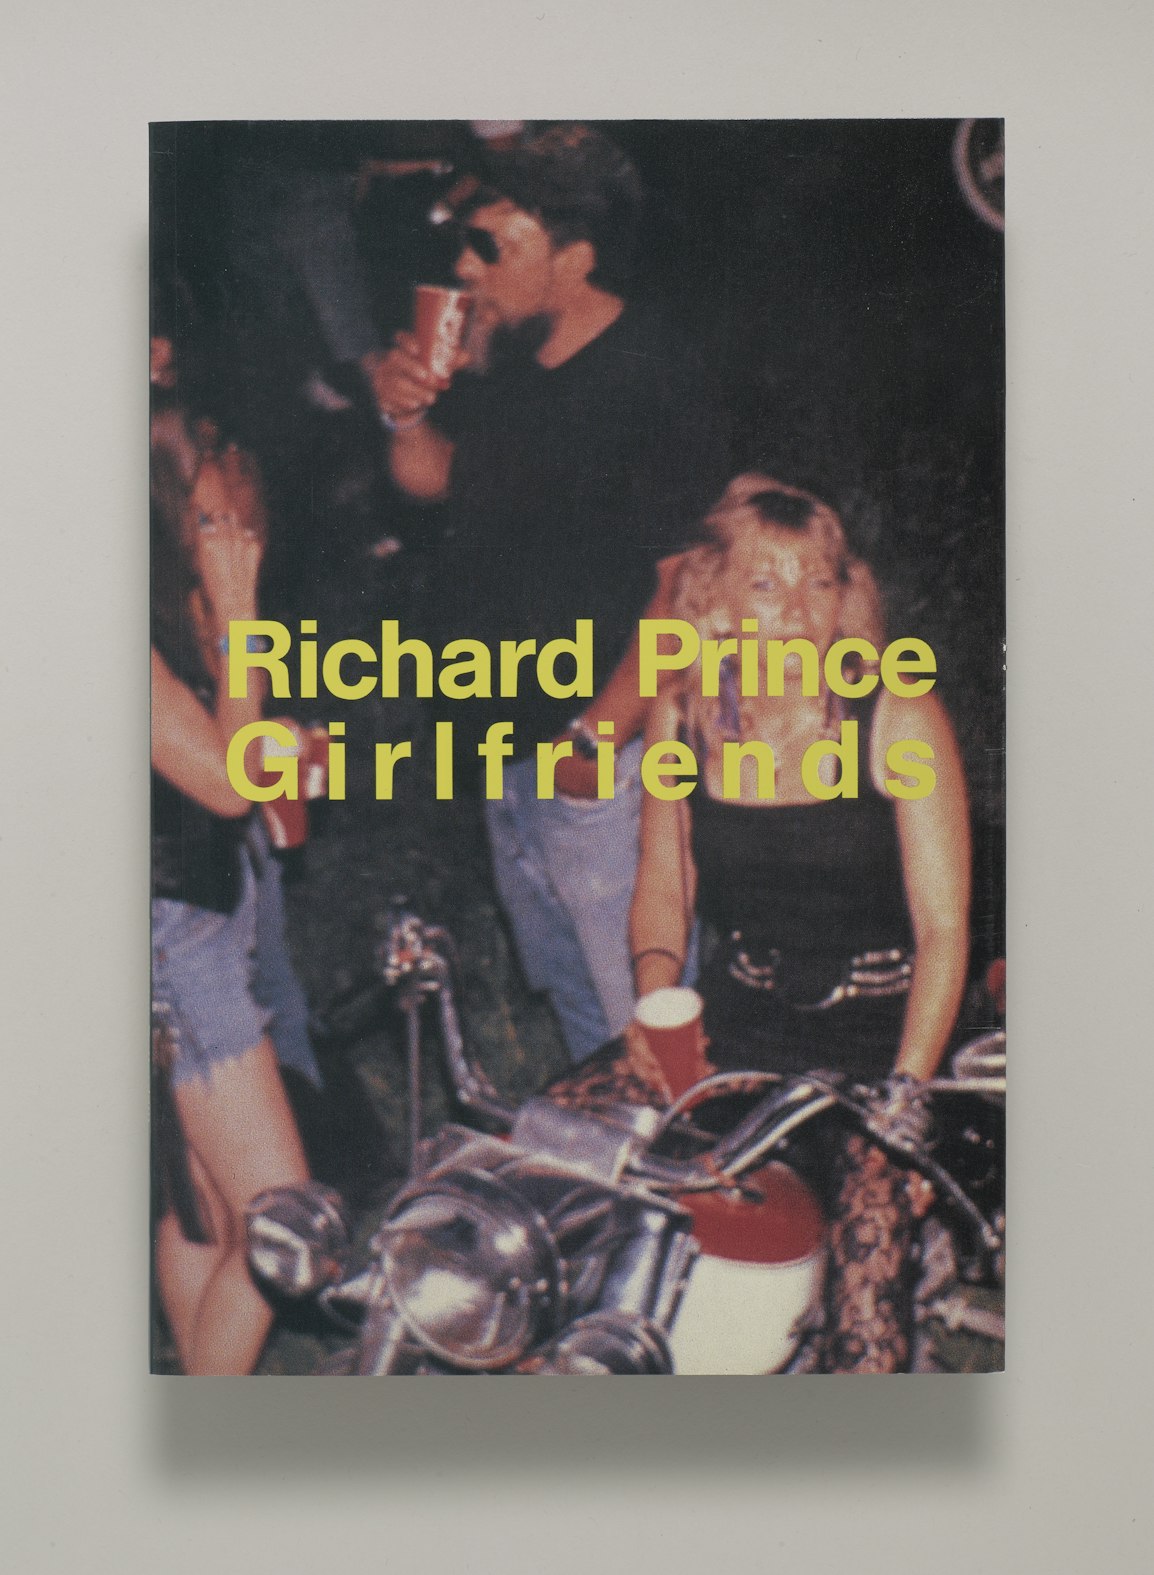 Richard Prince: Girlfriends